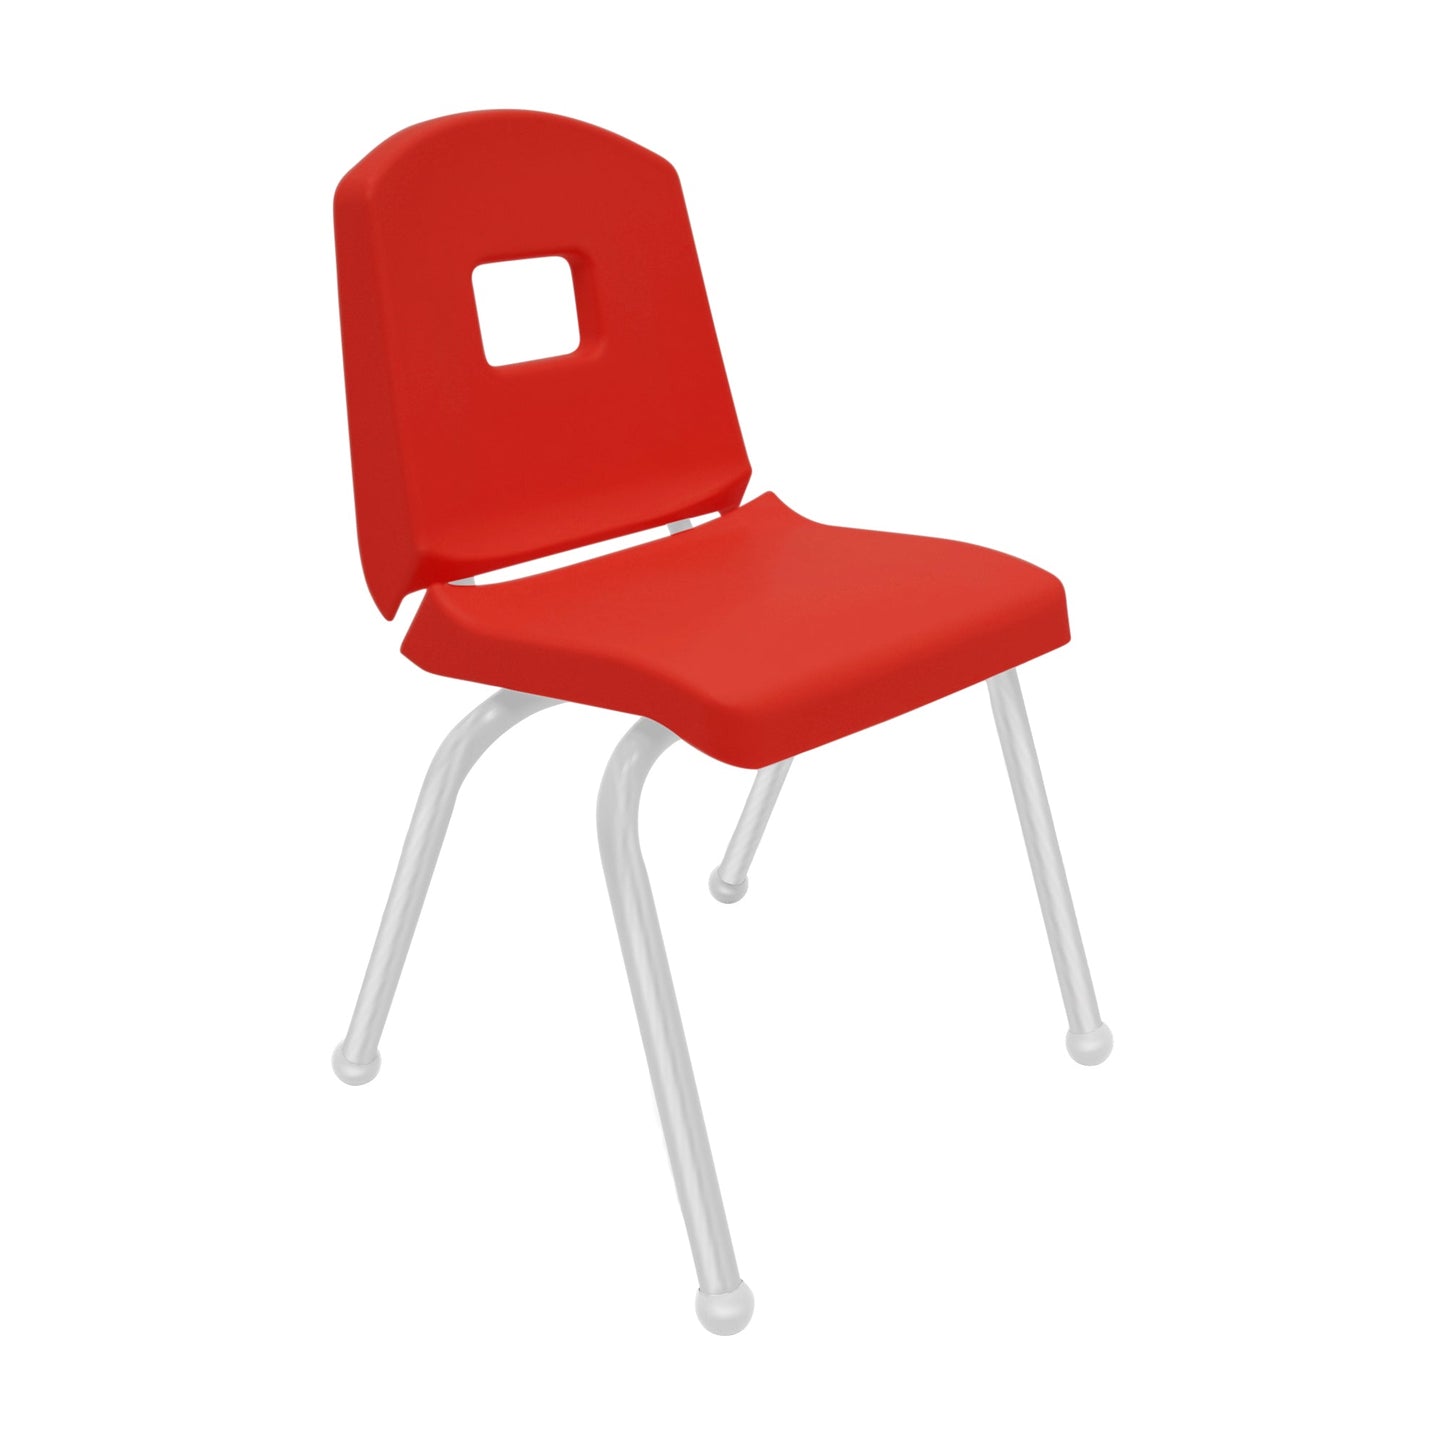 Mahar Creative Colors Split Bucket Chair 16" Seat Height (Mahar Creative Colors MHR-16CHR) - SchoolOutlet